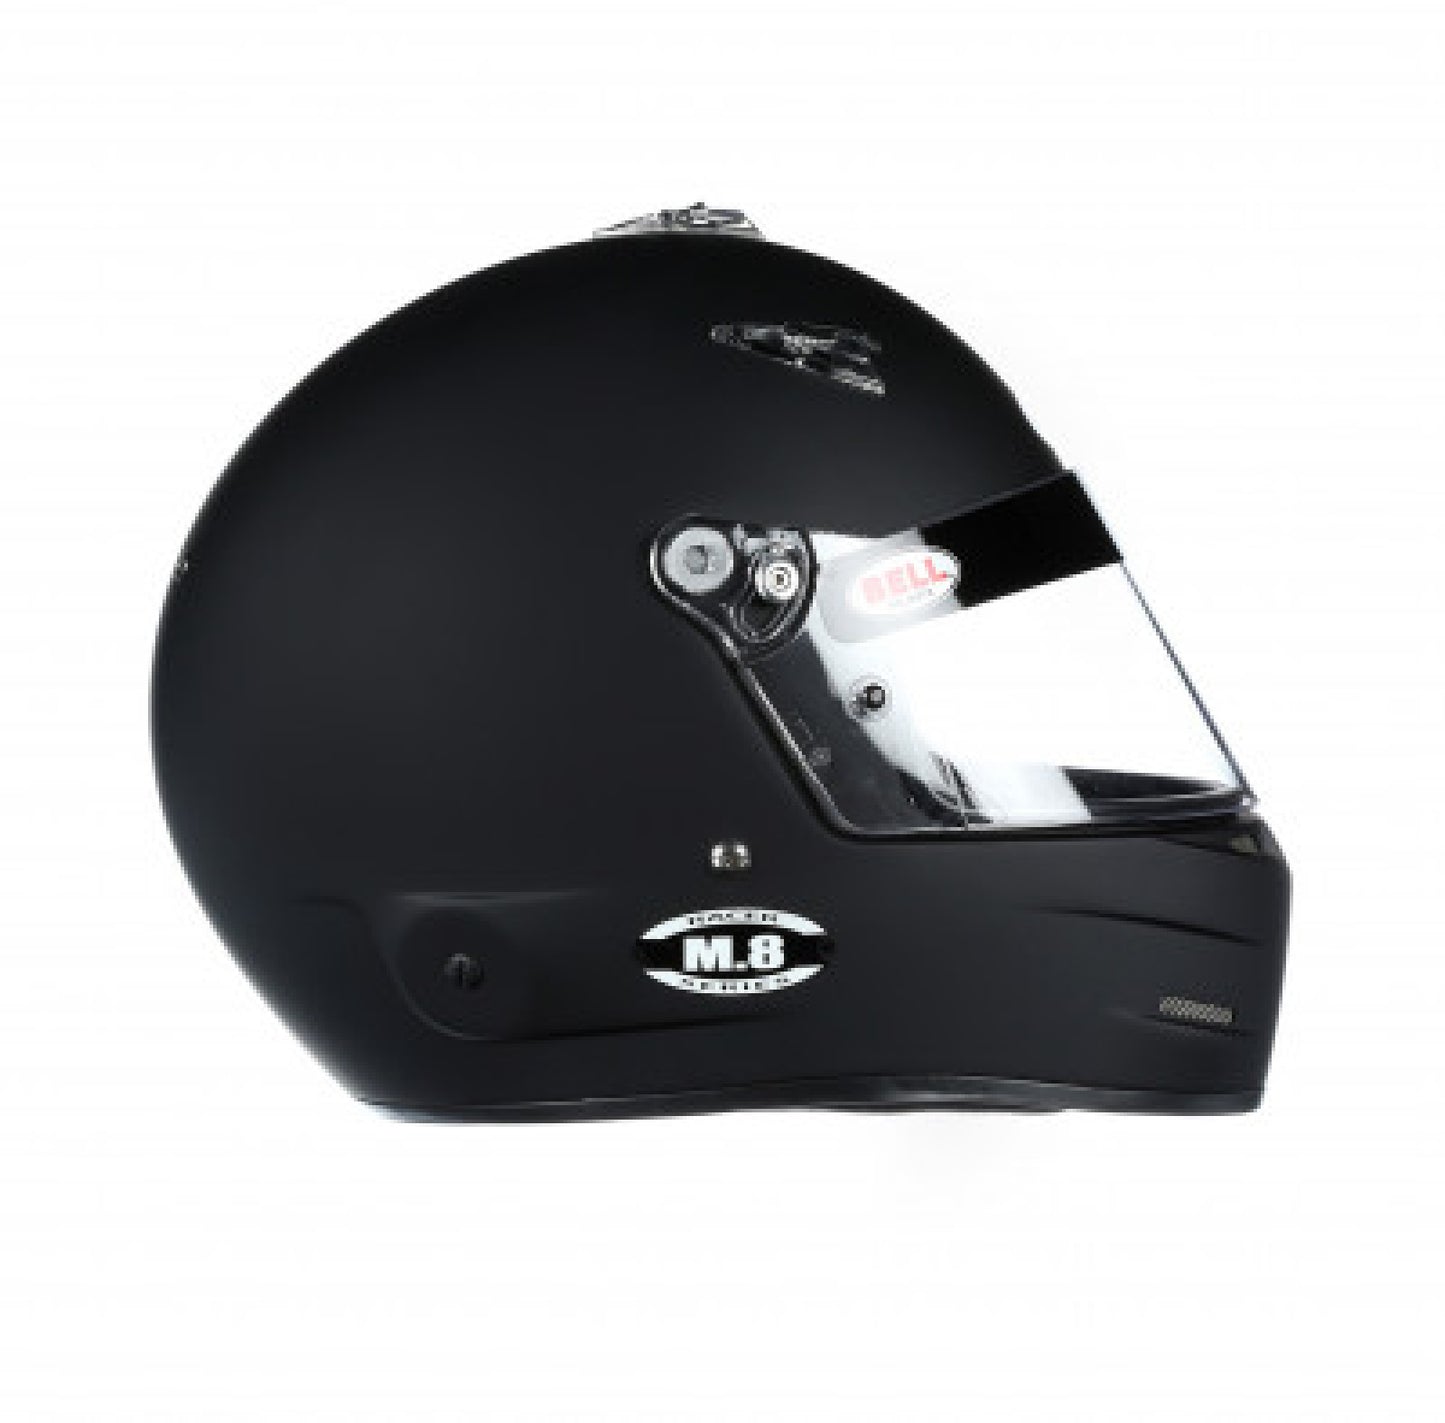 Bell M8 Racing Helmet- Matte Black Size 3X Extra Large